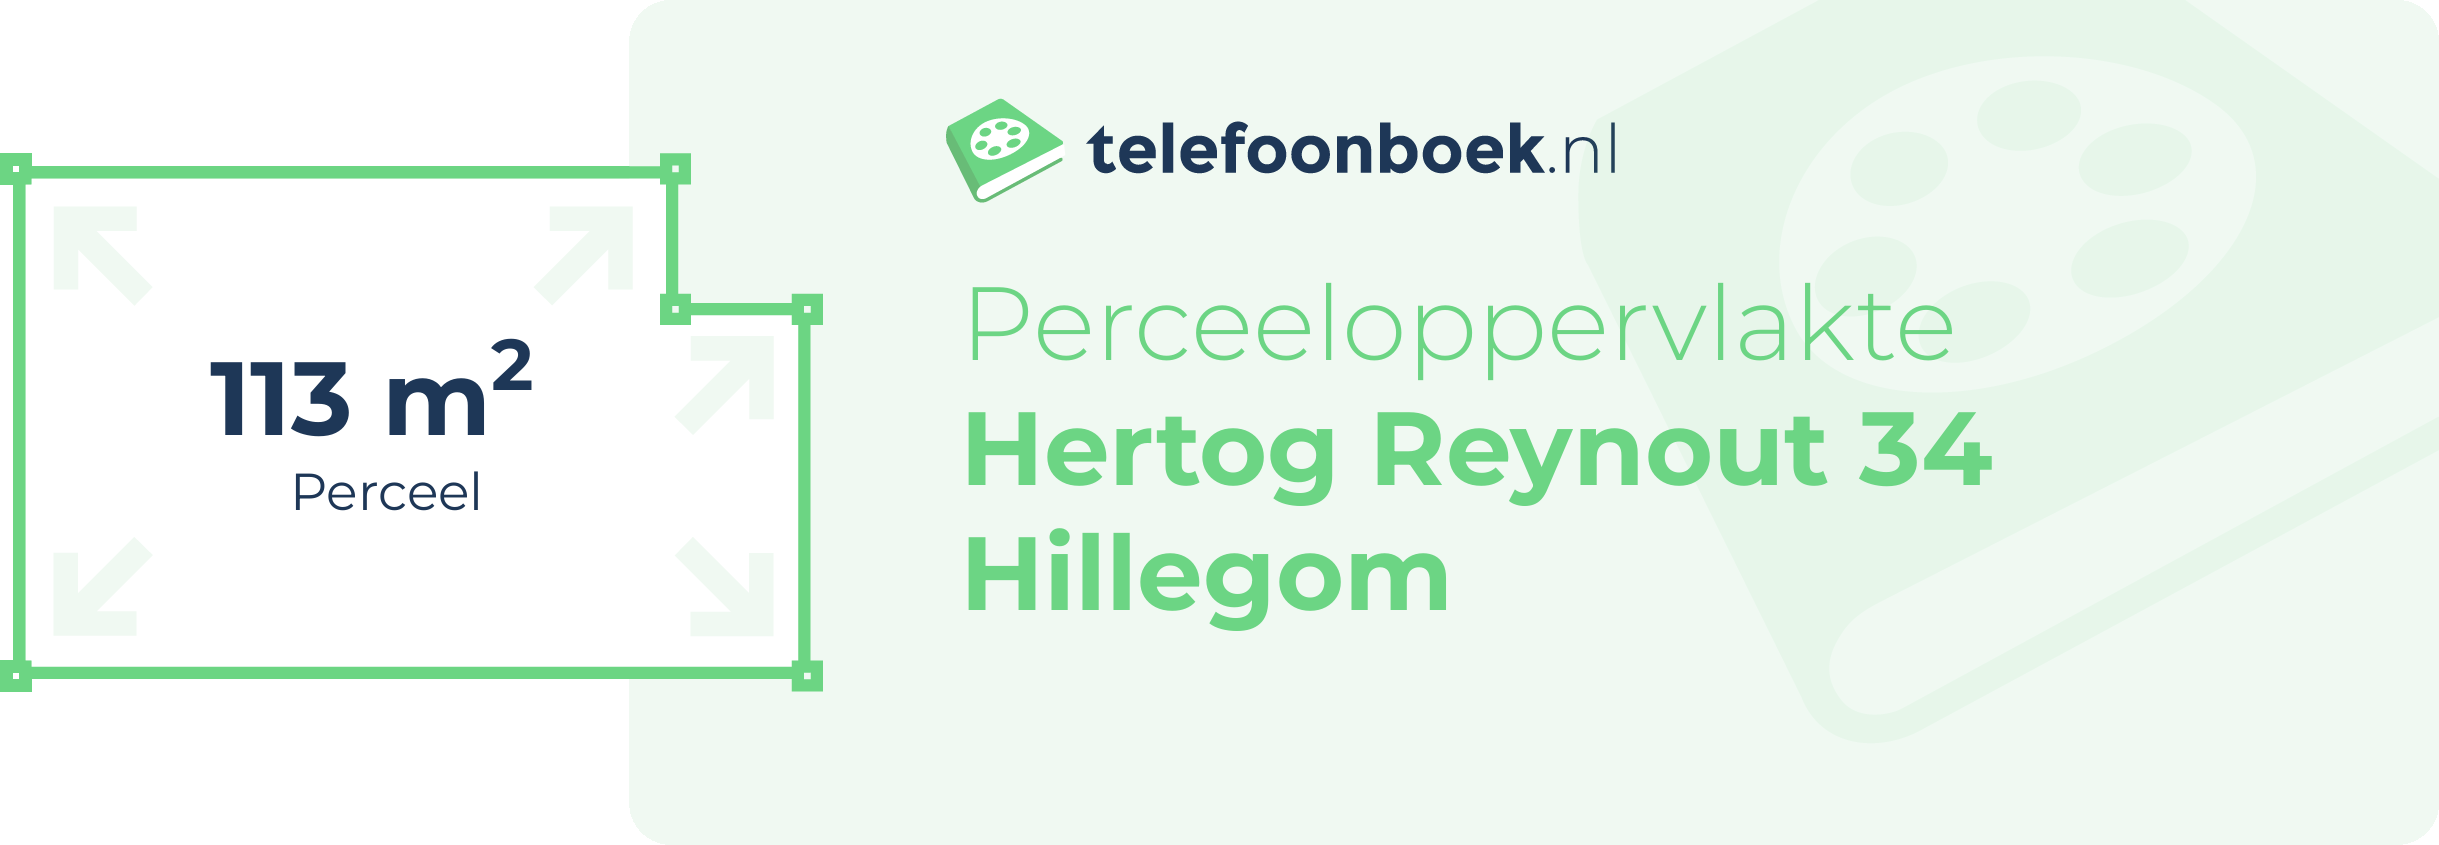 Perceeloppervlakte Hertog Reynout 34 Hillegom